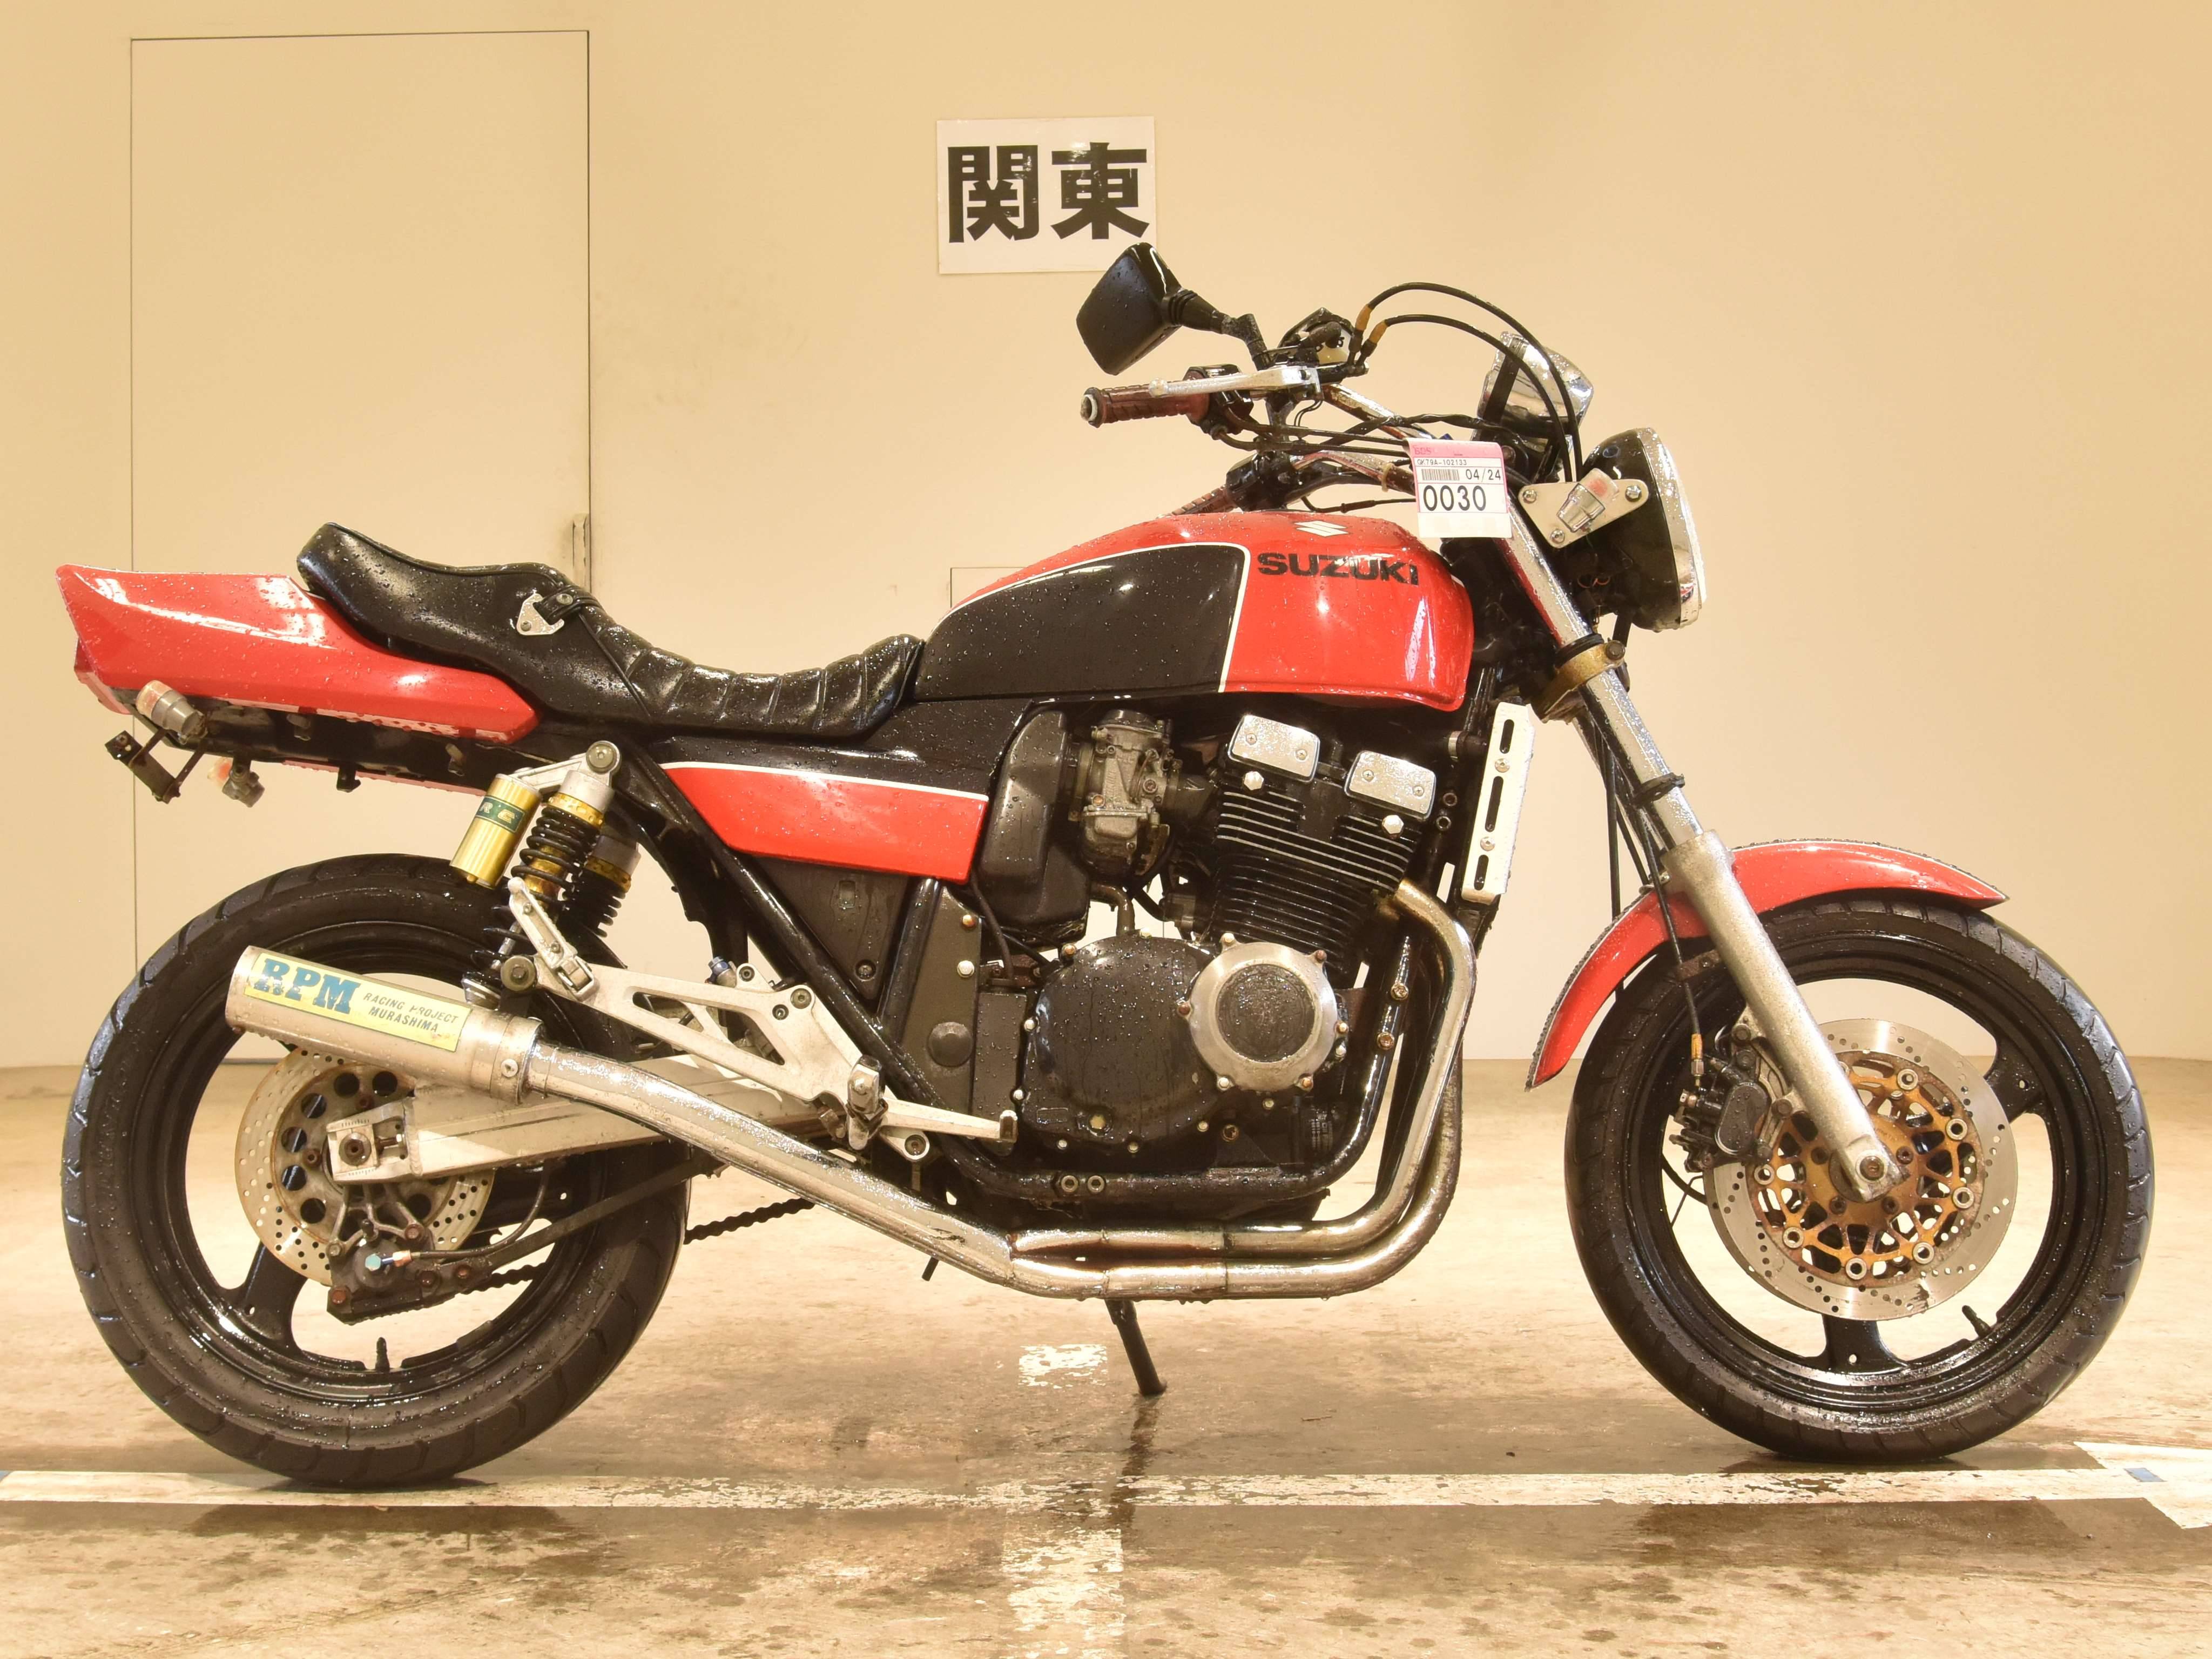 Мотоцикл gsx400 inazuma (2002): технические характеристики, фото, видео